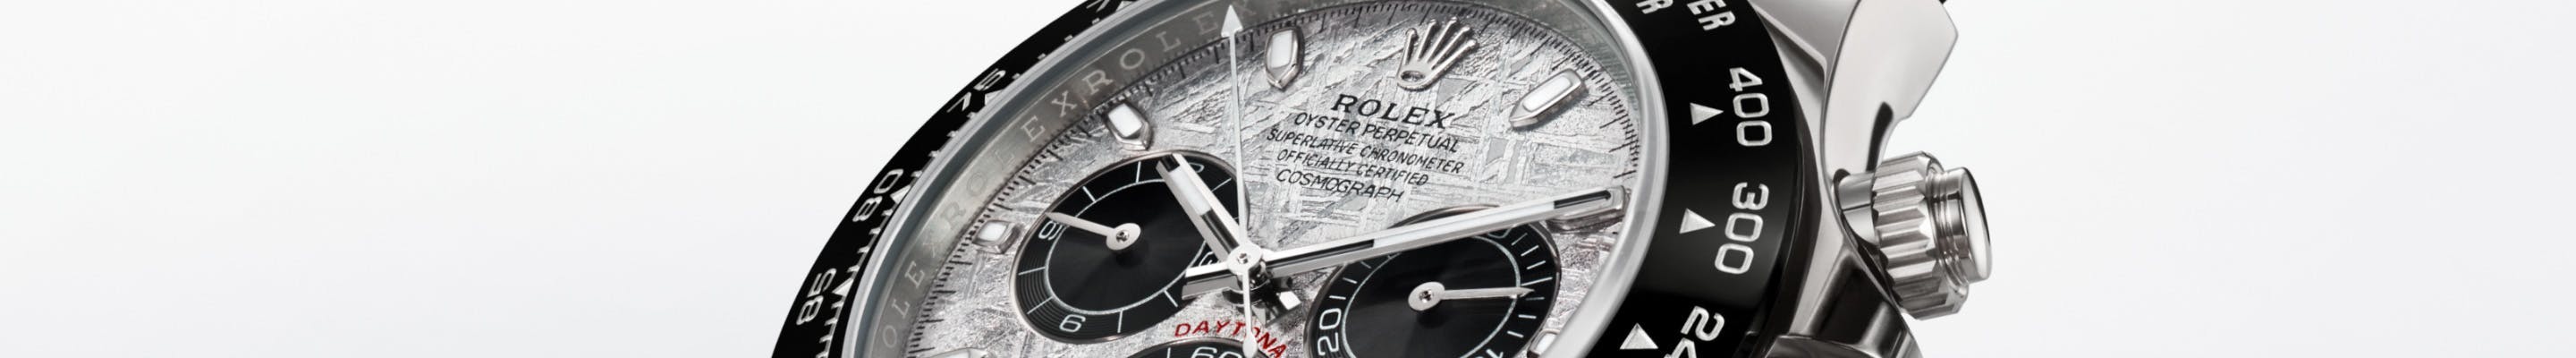 Rolex Cosmograph Daytona at Eiseman Jewels in Dallas, Texas